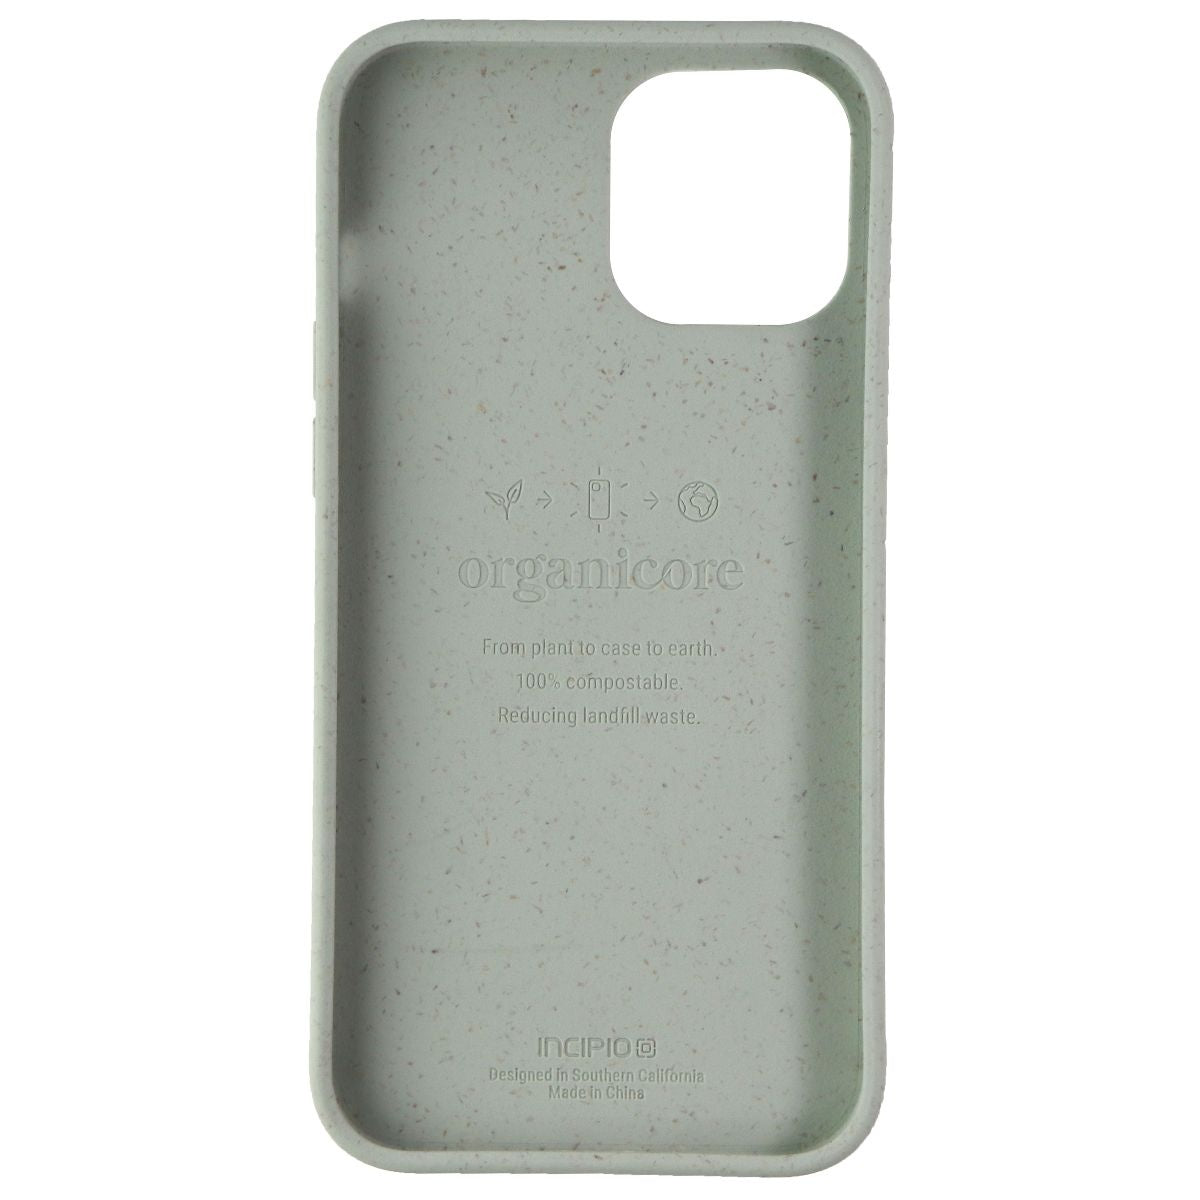 Incipio Organicore Protective Case for Apple iPhone 12 Pro Max - Eucalyptus